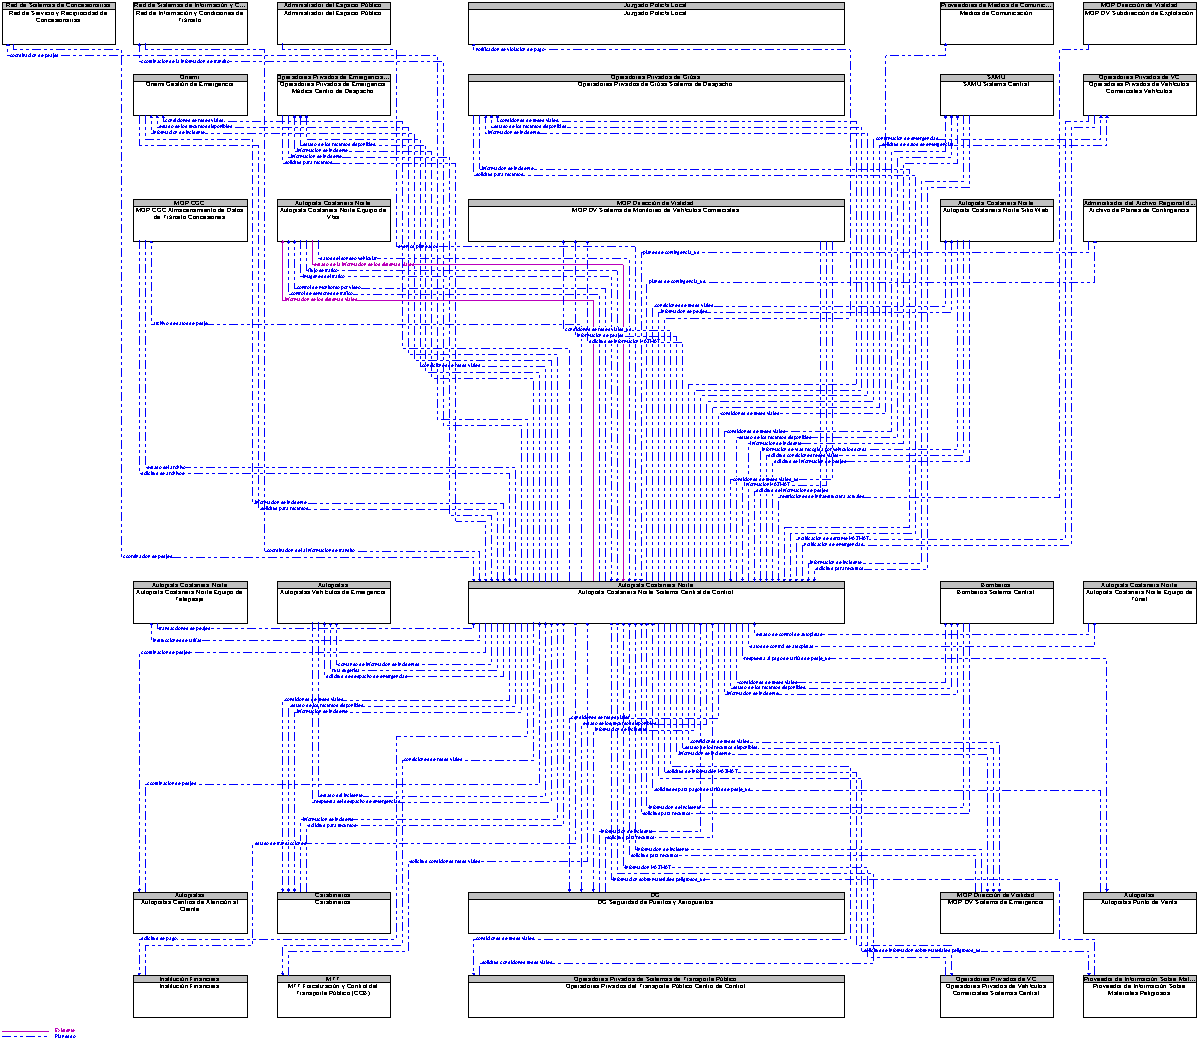 Diagrama Del Contexto por Autopista Costanera Norte Sistema Central de Control